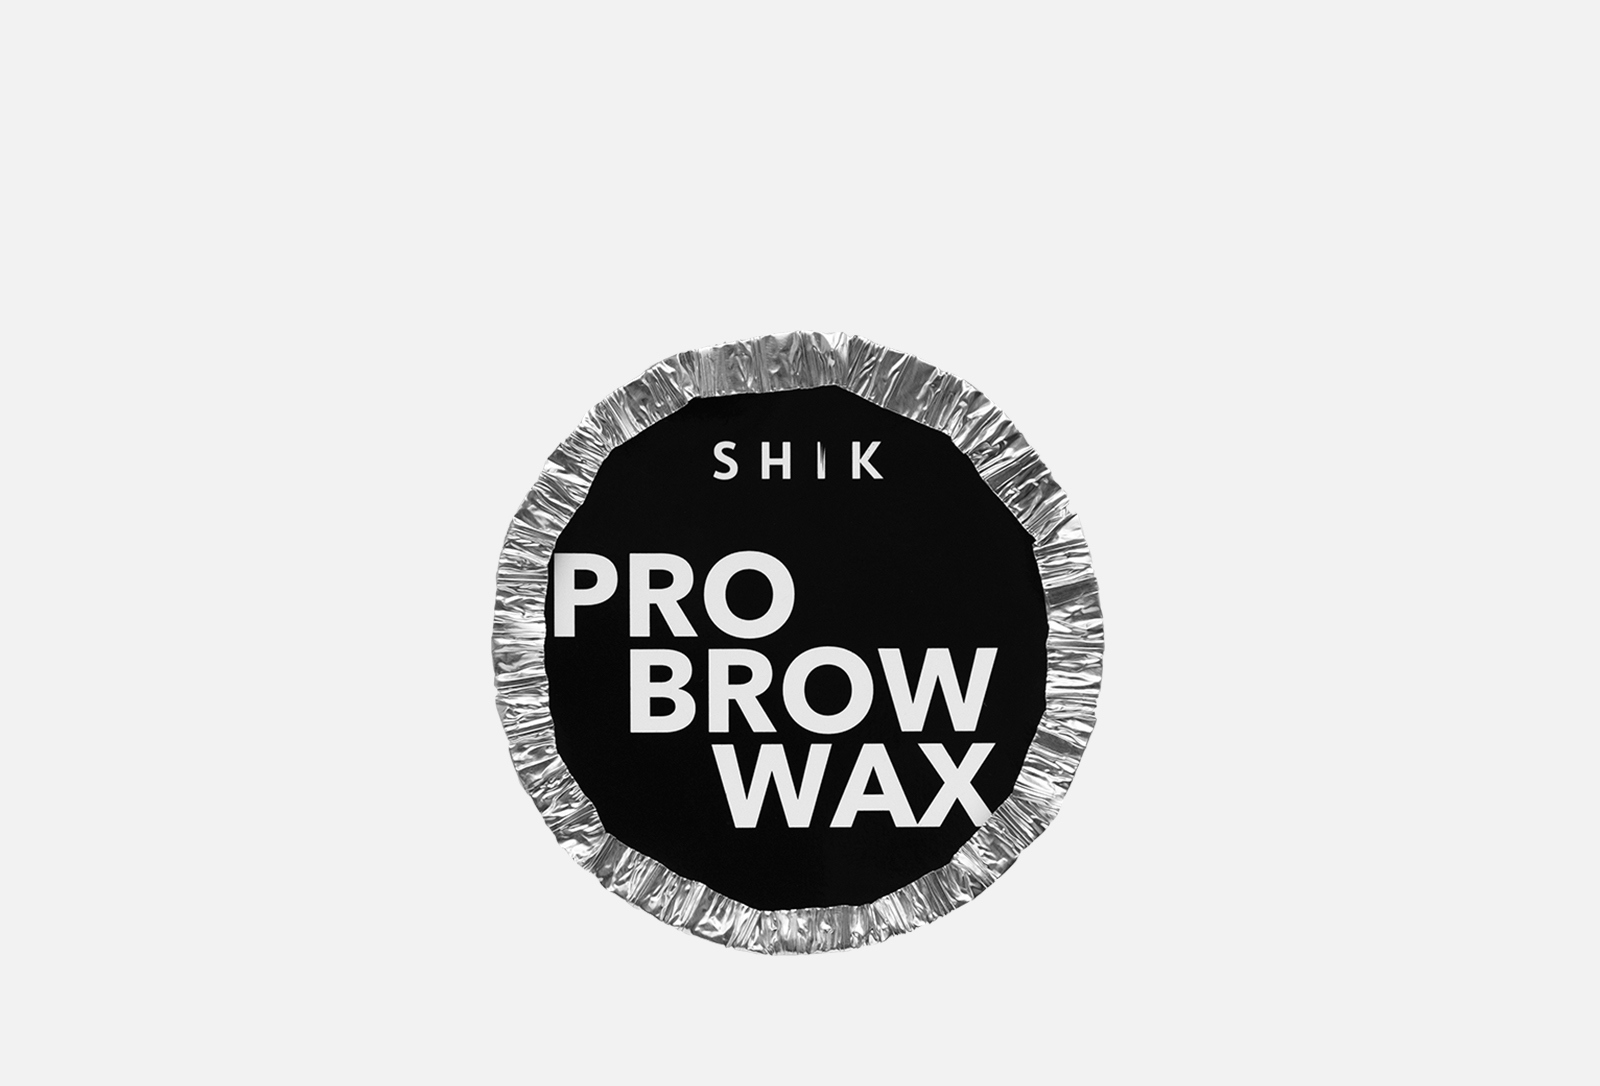 Shik brow. Shik Pro Brow Wax. Shik система воска. Воск Шик для бровей. Воск Brow Wax.